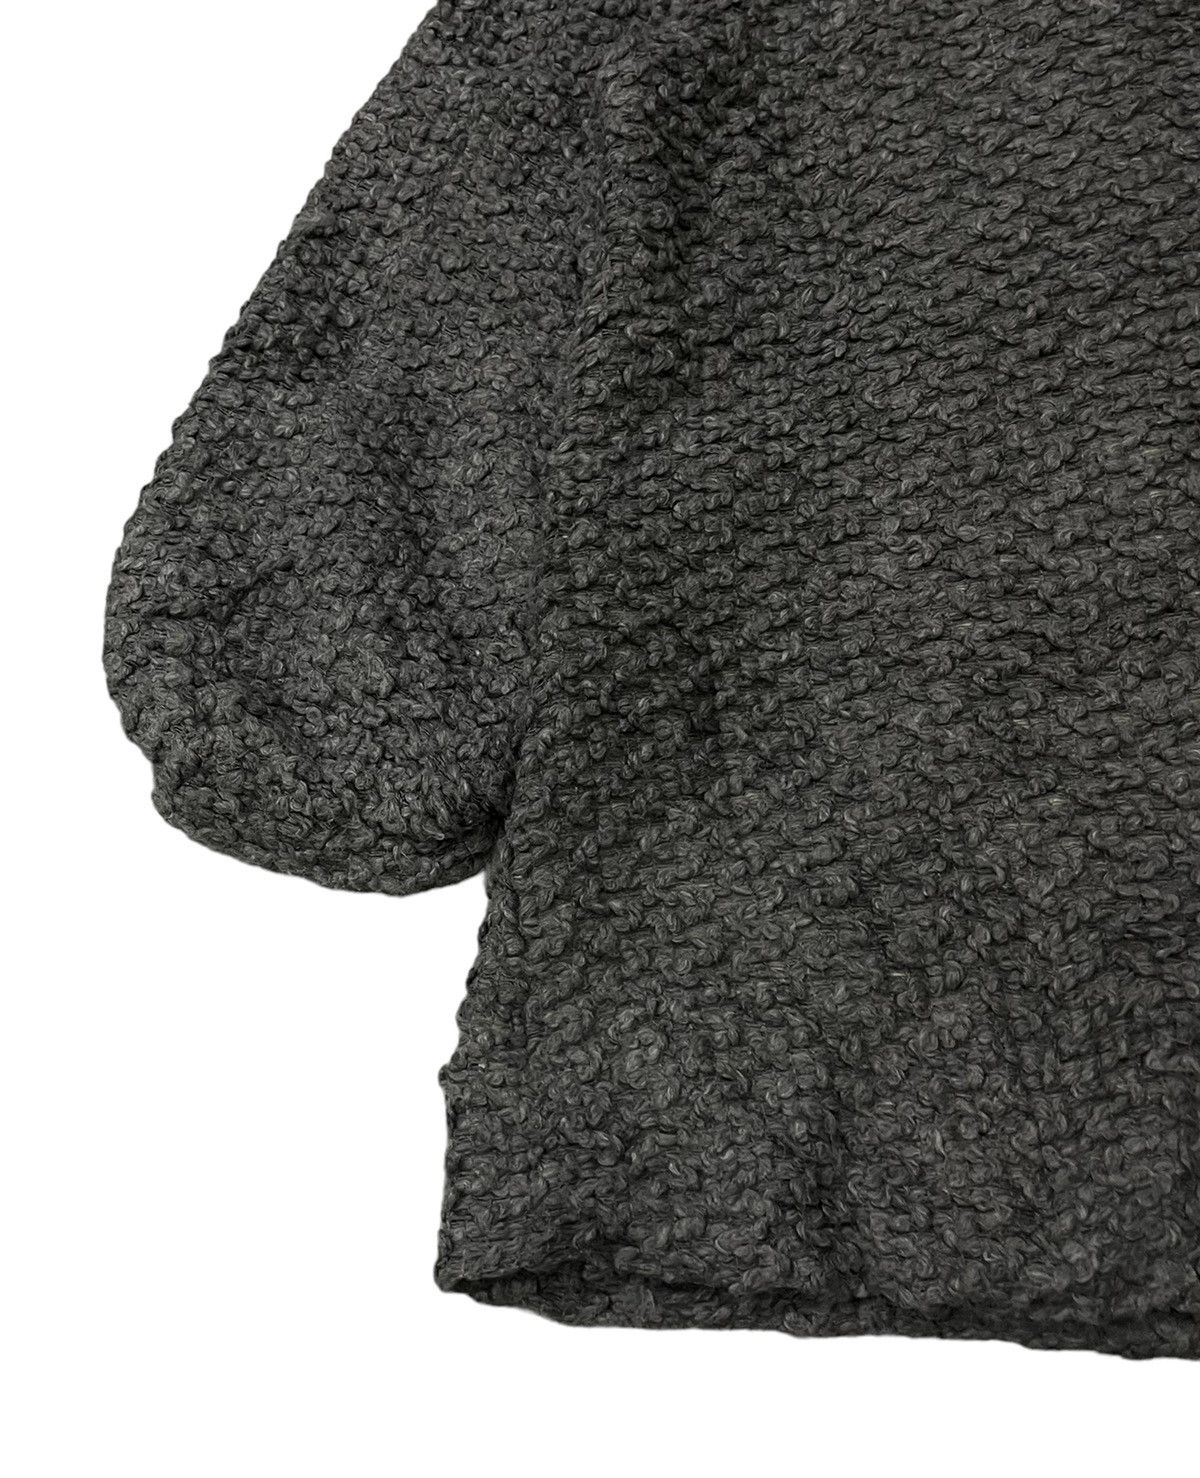 Issey Miyake Vintage Tsumori Chisato Issey Miyake Knitted Hooded Jacket Size M / US 6-8 / IT 42-44 - 15 Thumbnail